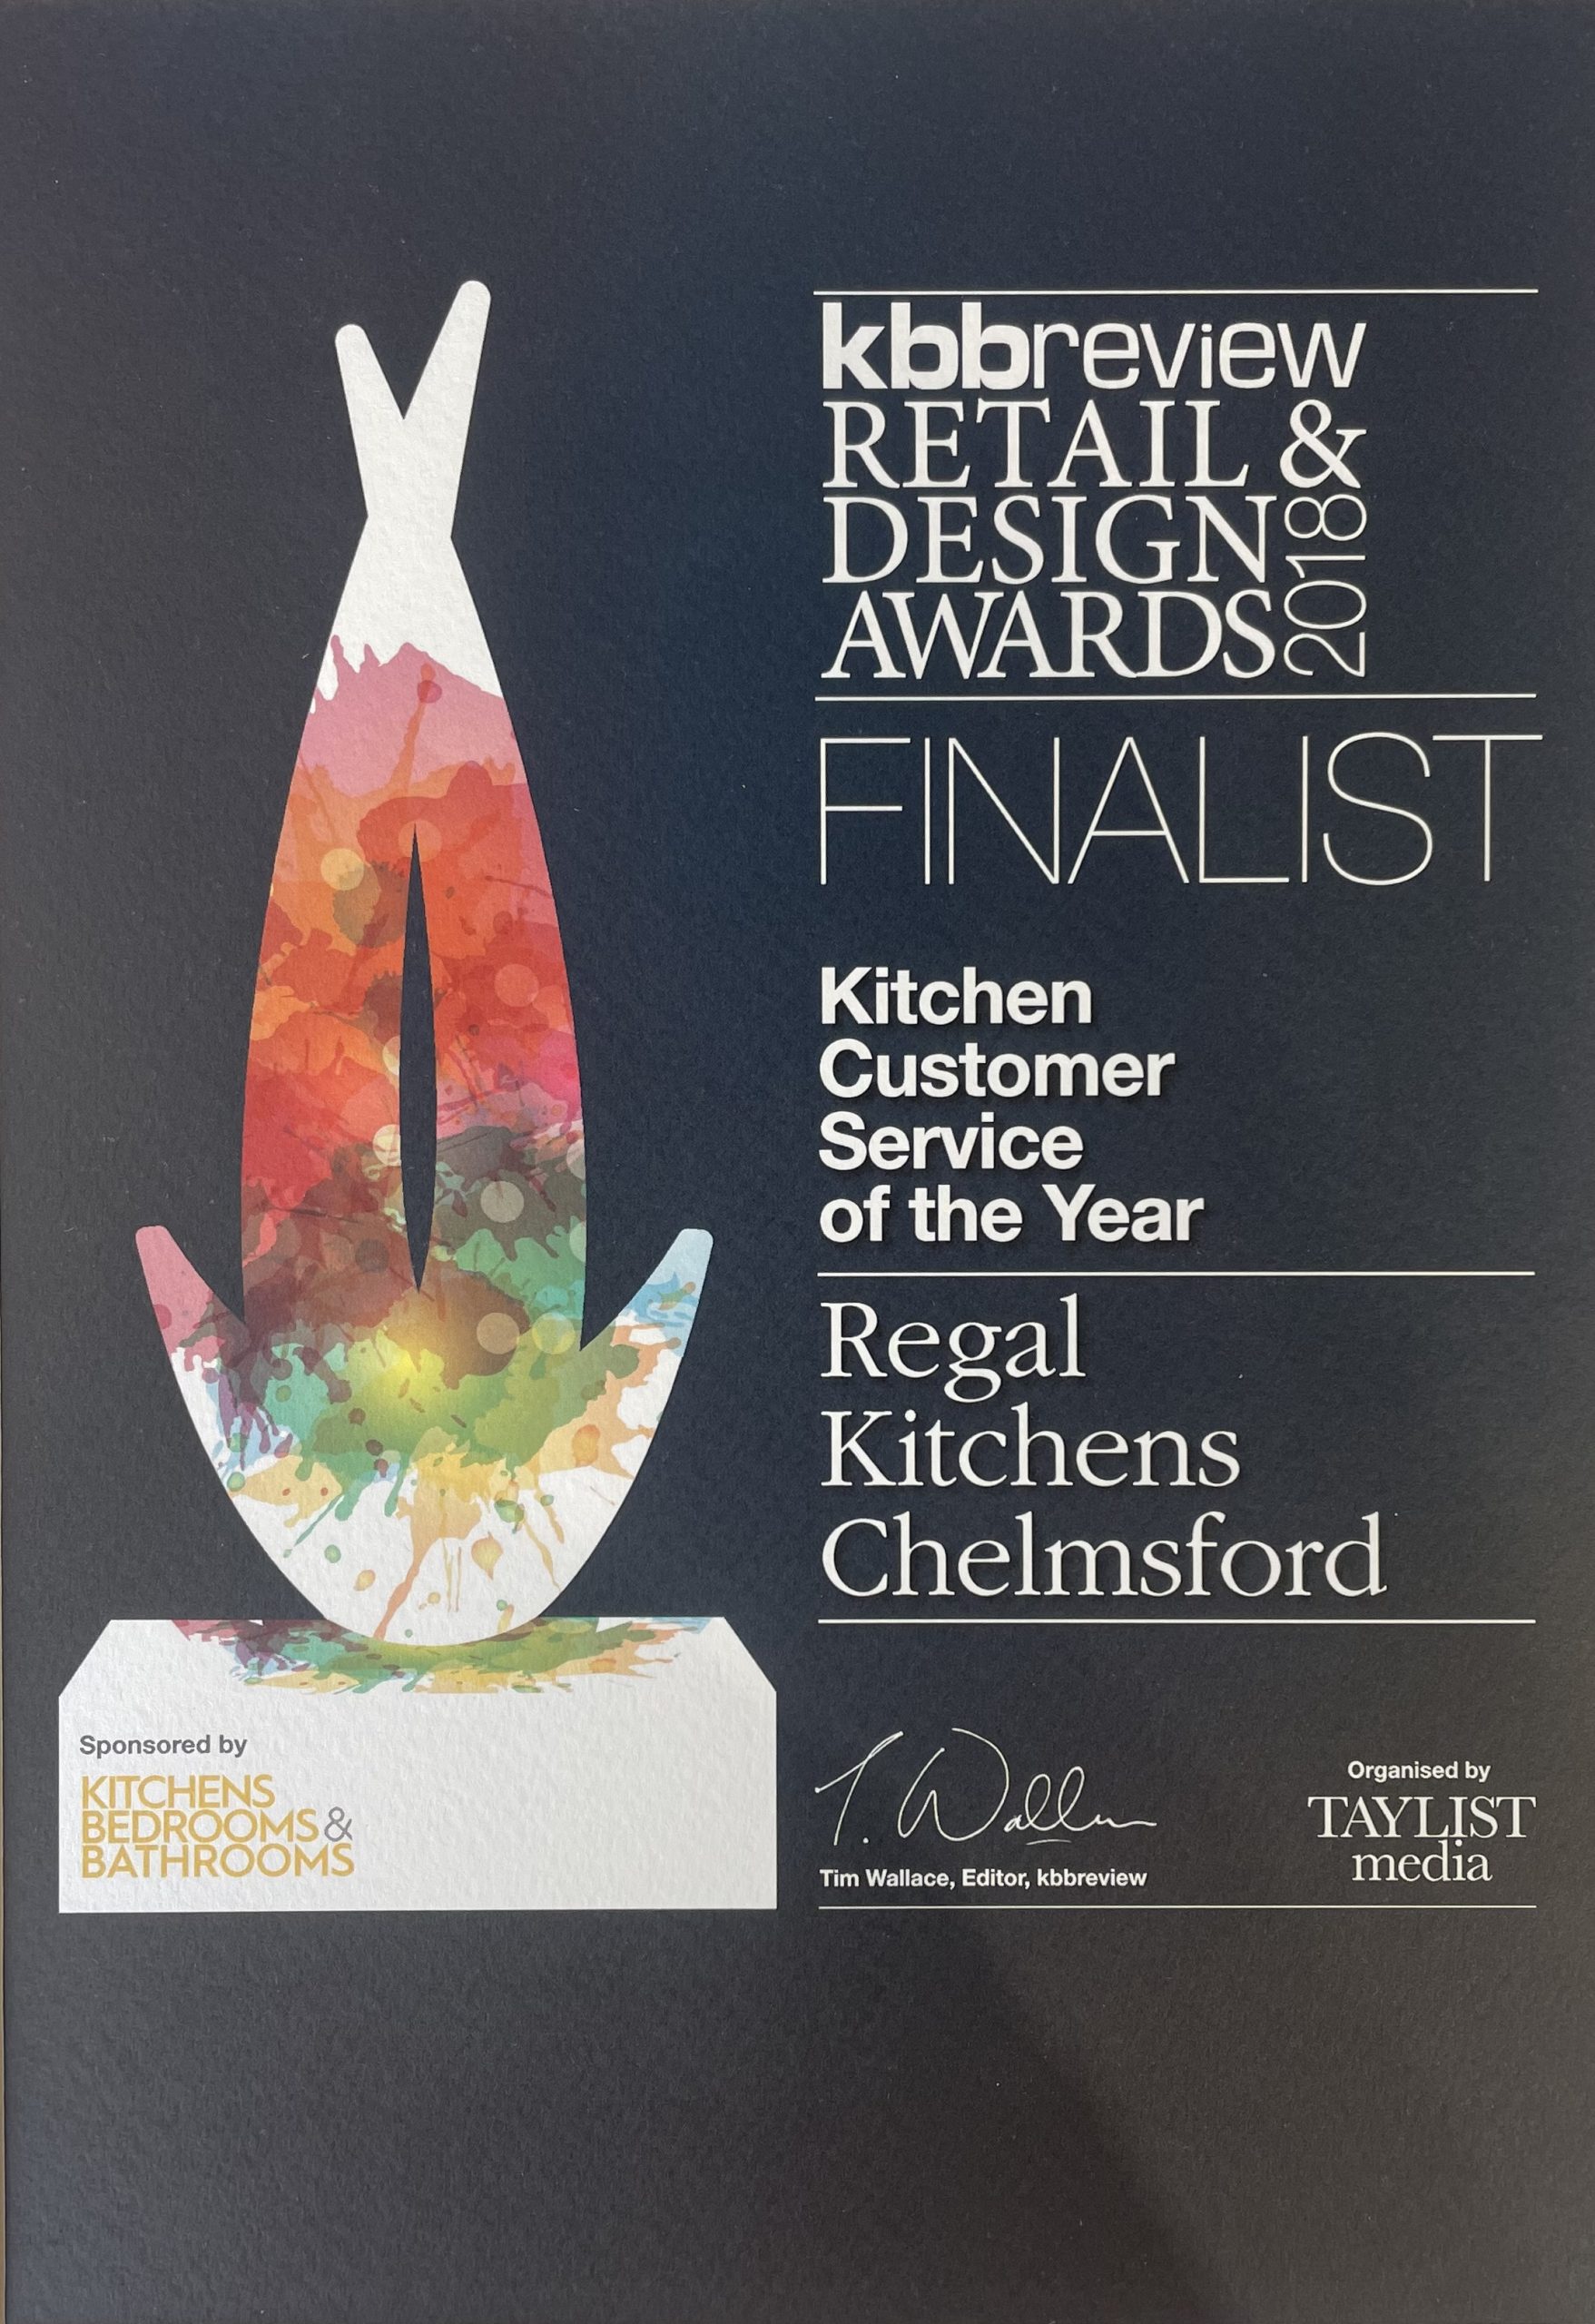 2018 - KBB Review Awards - Customer Service Award - Finalist 